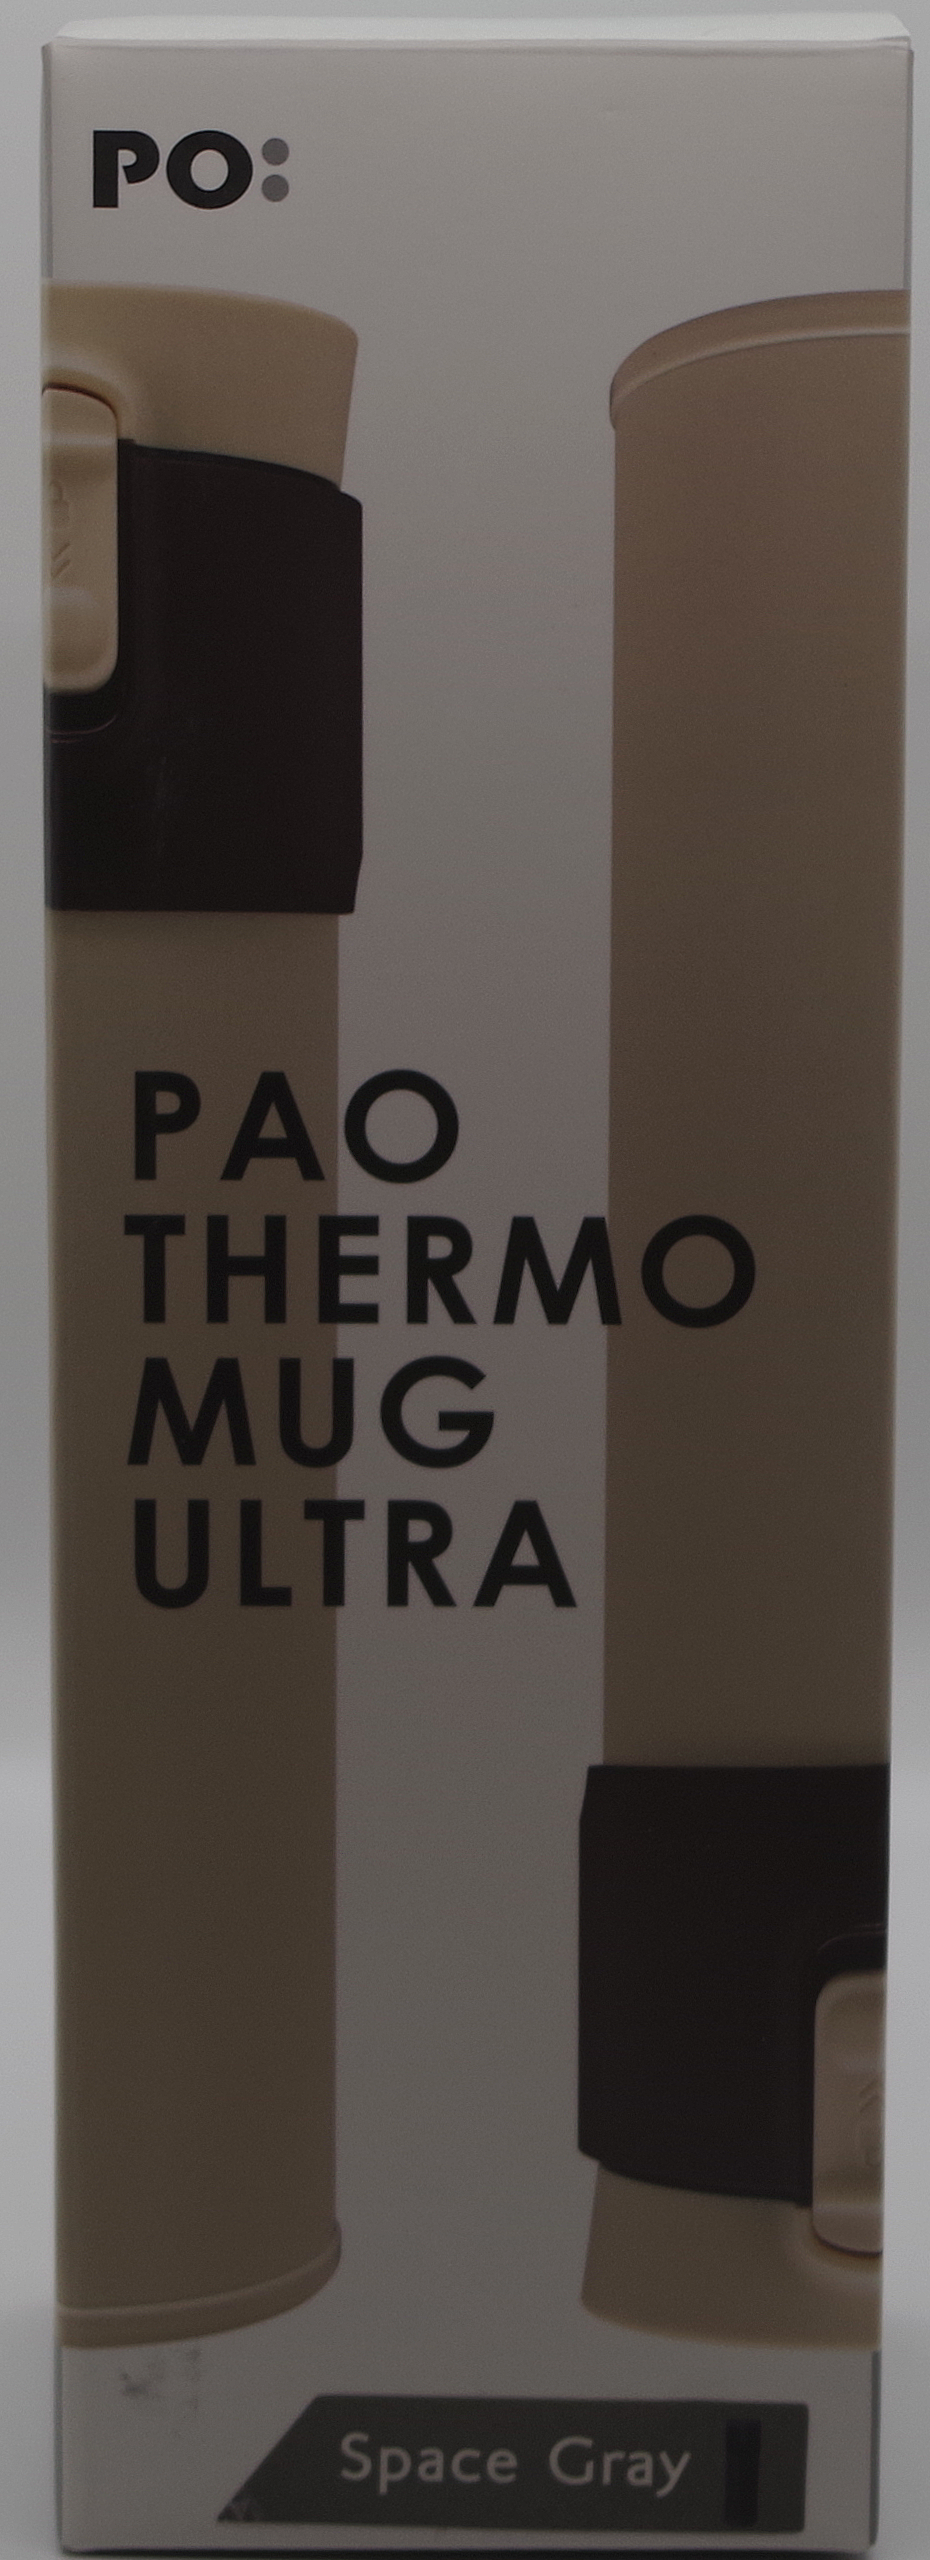 PAO Thermo mug Ultra